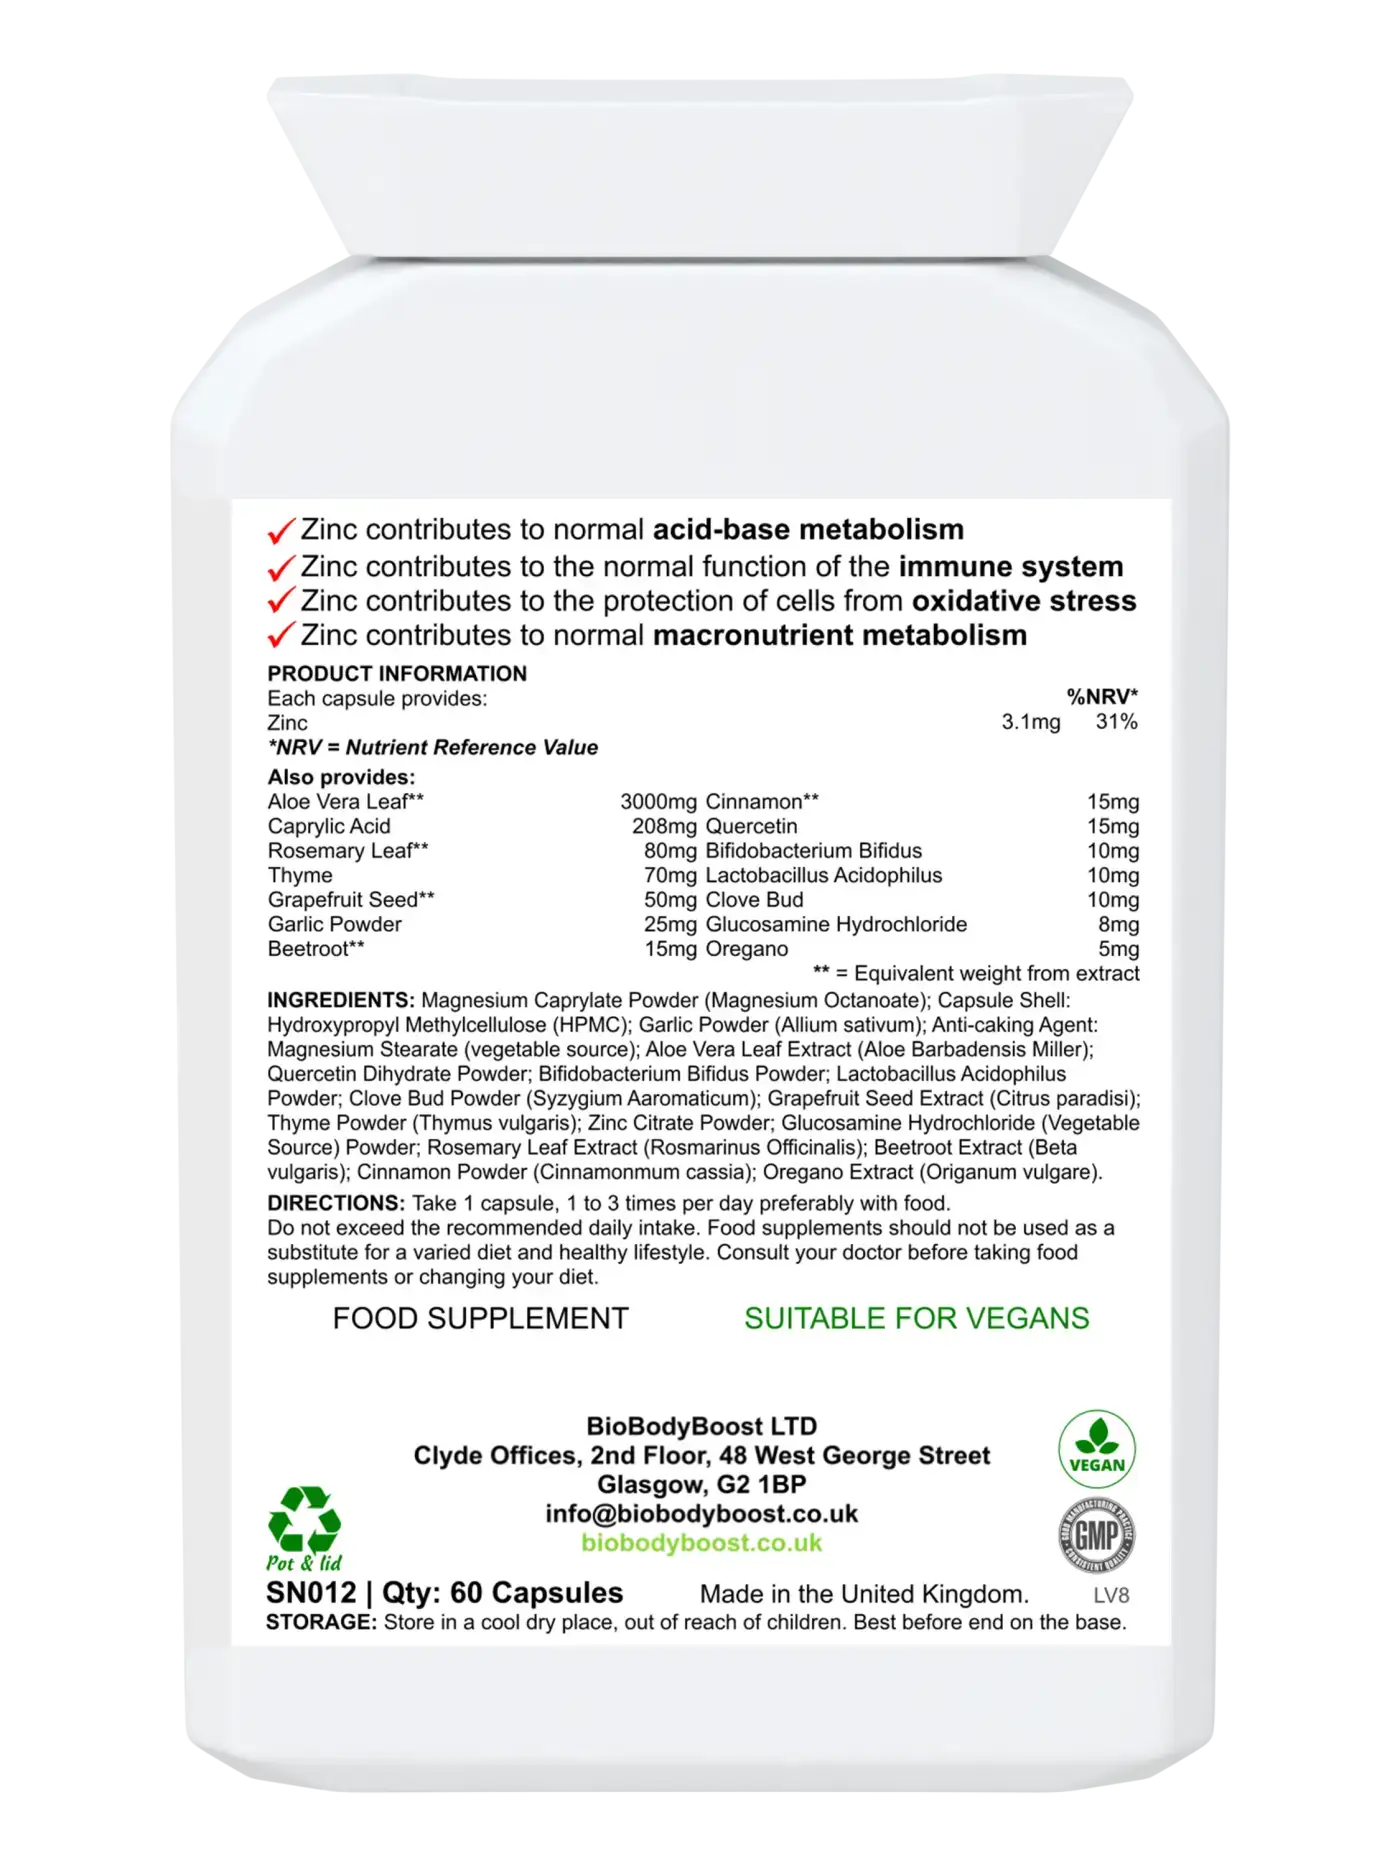 CapryBio-All In One Caprylic Acid-Probiotics-Active Herbs - Premium Vitamins & Supplements from BioBodyBoost - Just £14.99! Shop now at BioBodyBoost